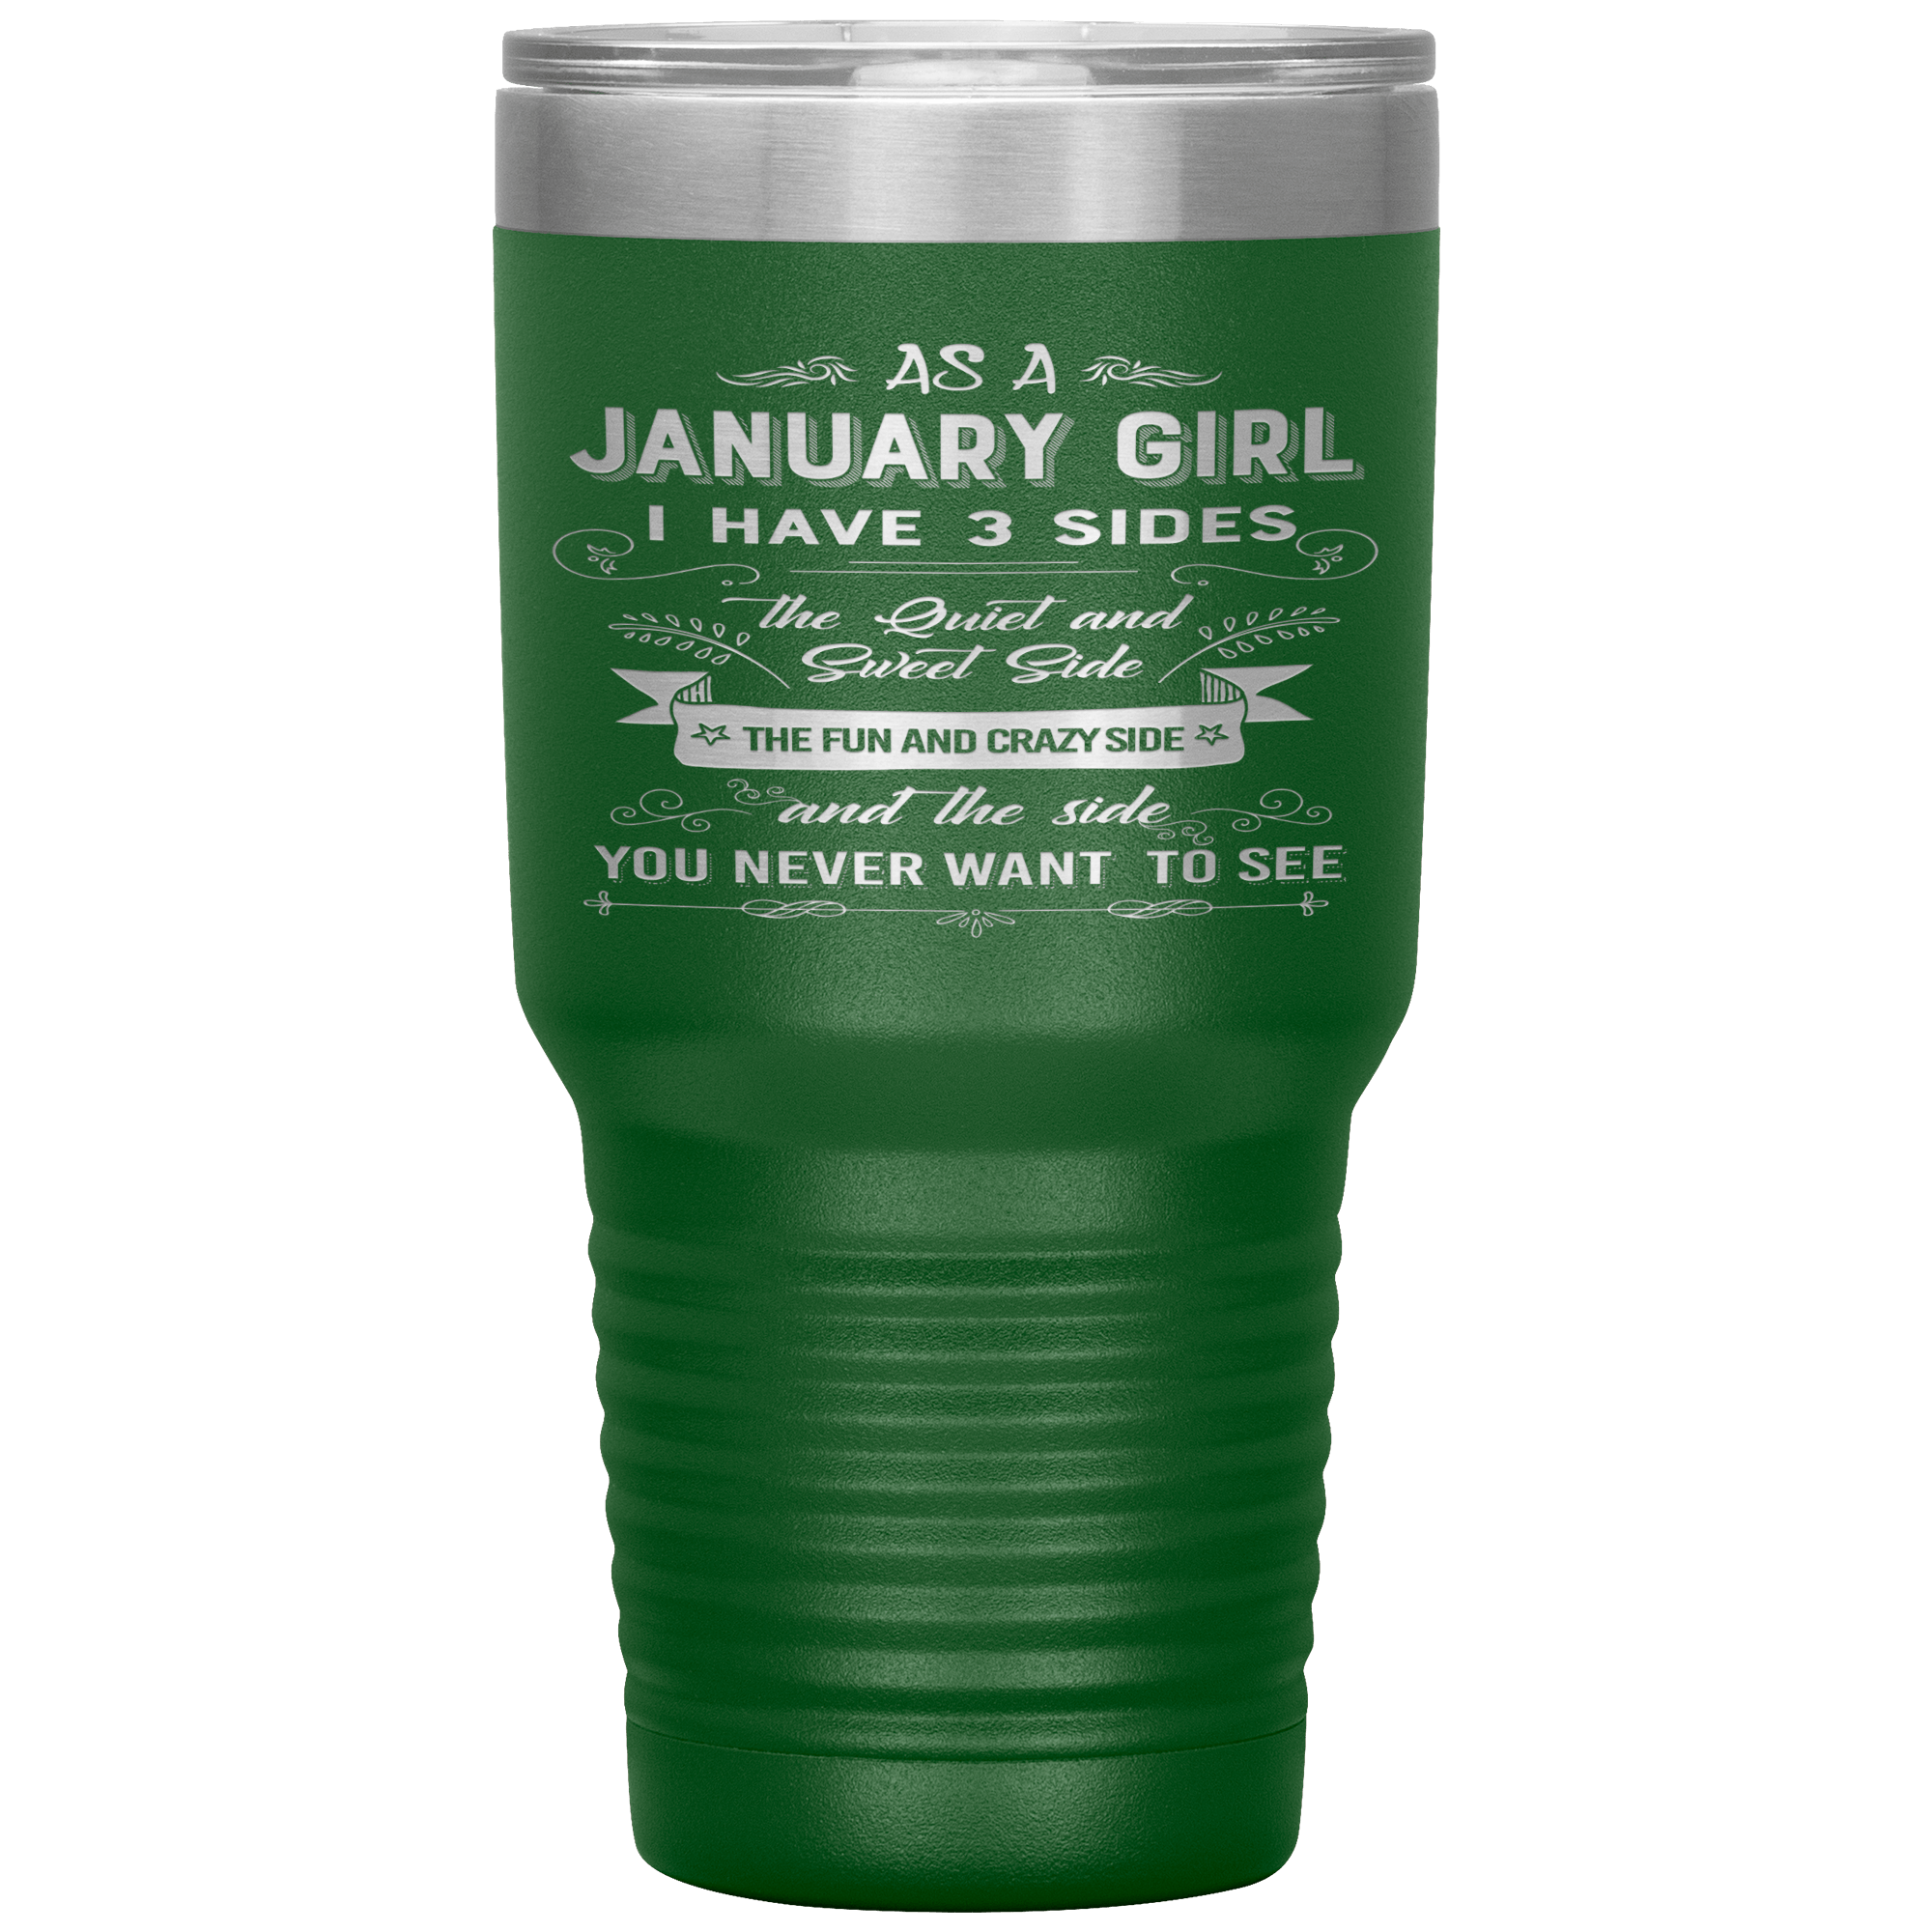 "January Girl 3 sides" Tumbler